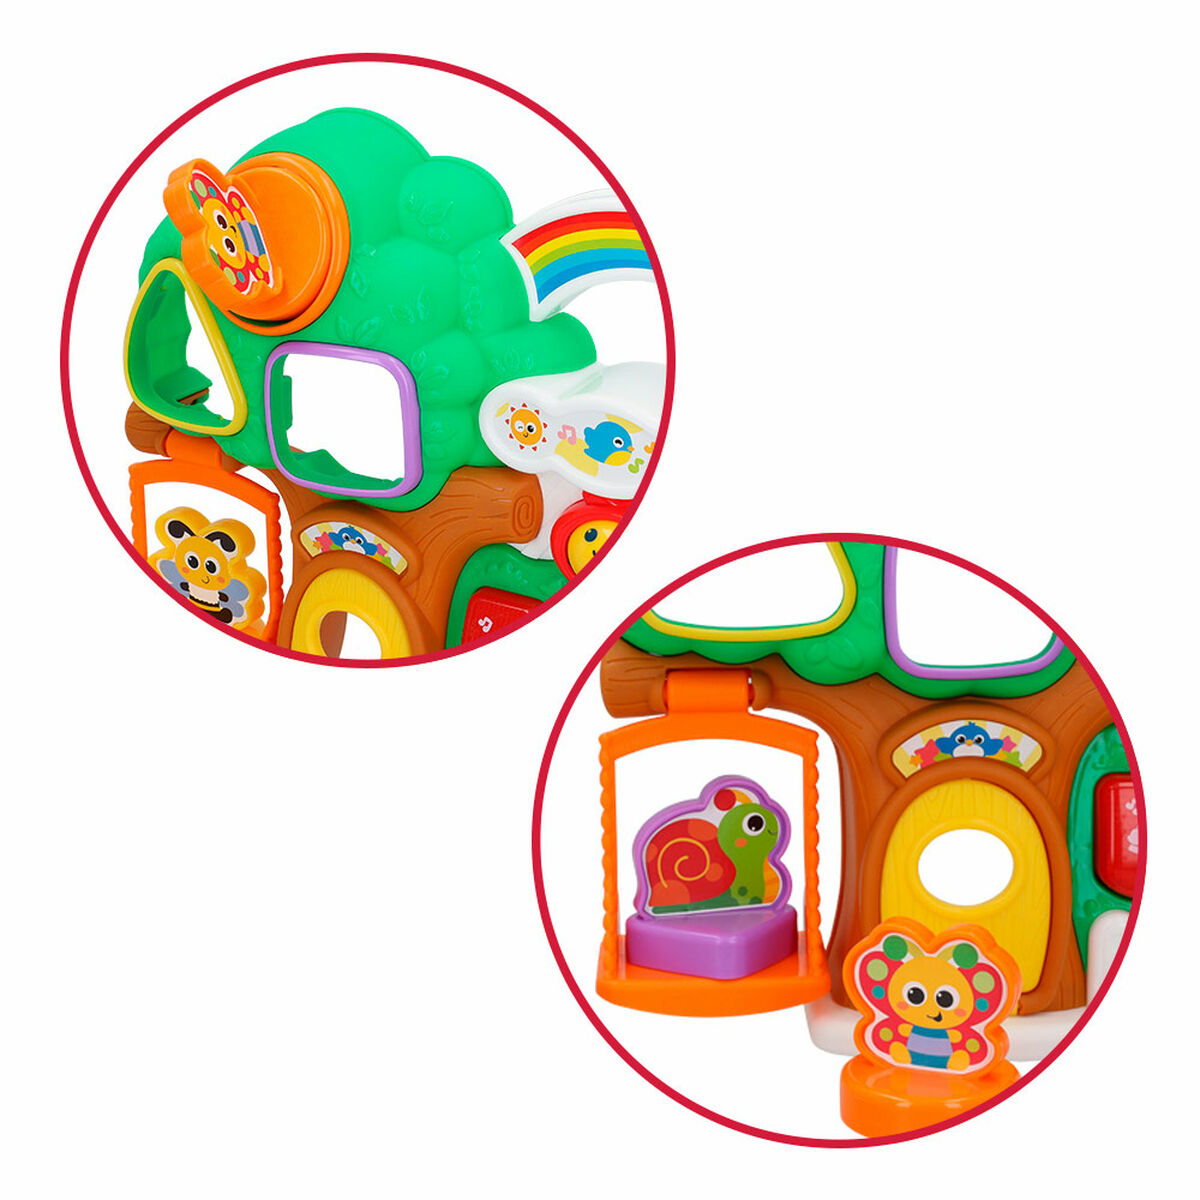 Interaktiv leksak för småbarn Winfun Hus 32 x 24,5 x 7 cm (6 antal)